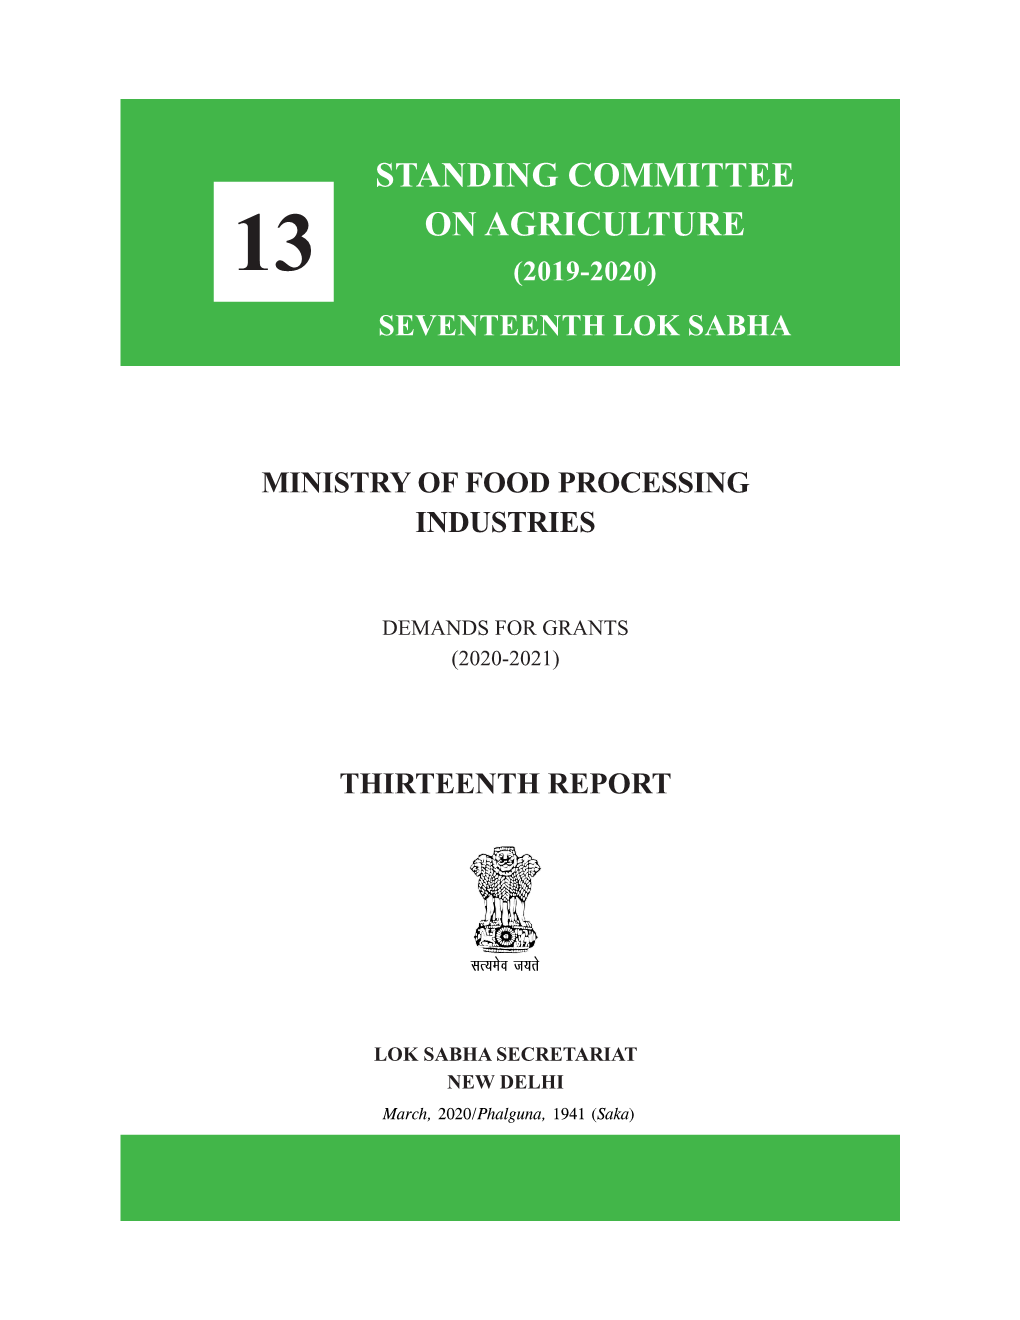 Seventeenth Lok Sabha Ministry of Food Processing Industries Demands for Grants